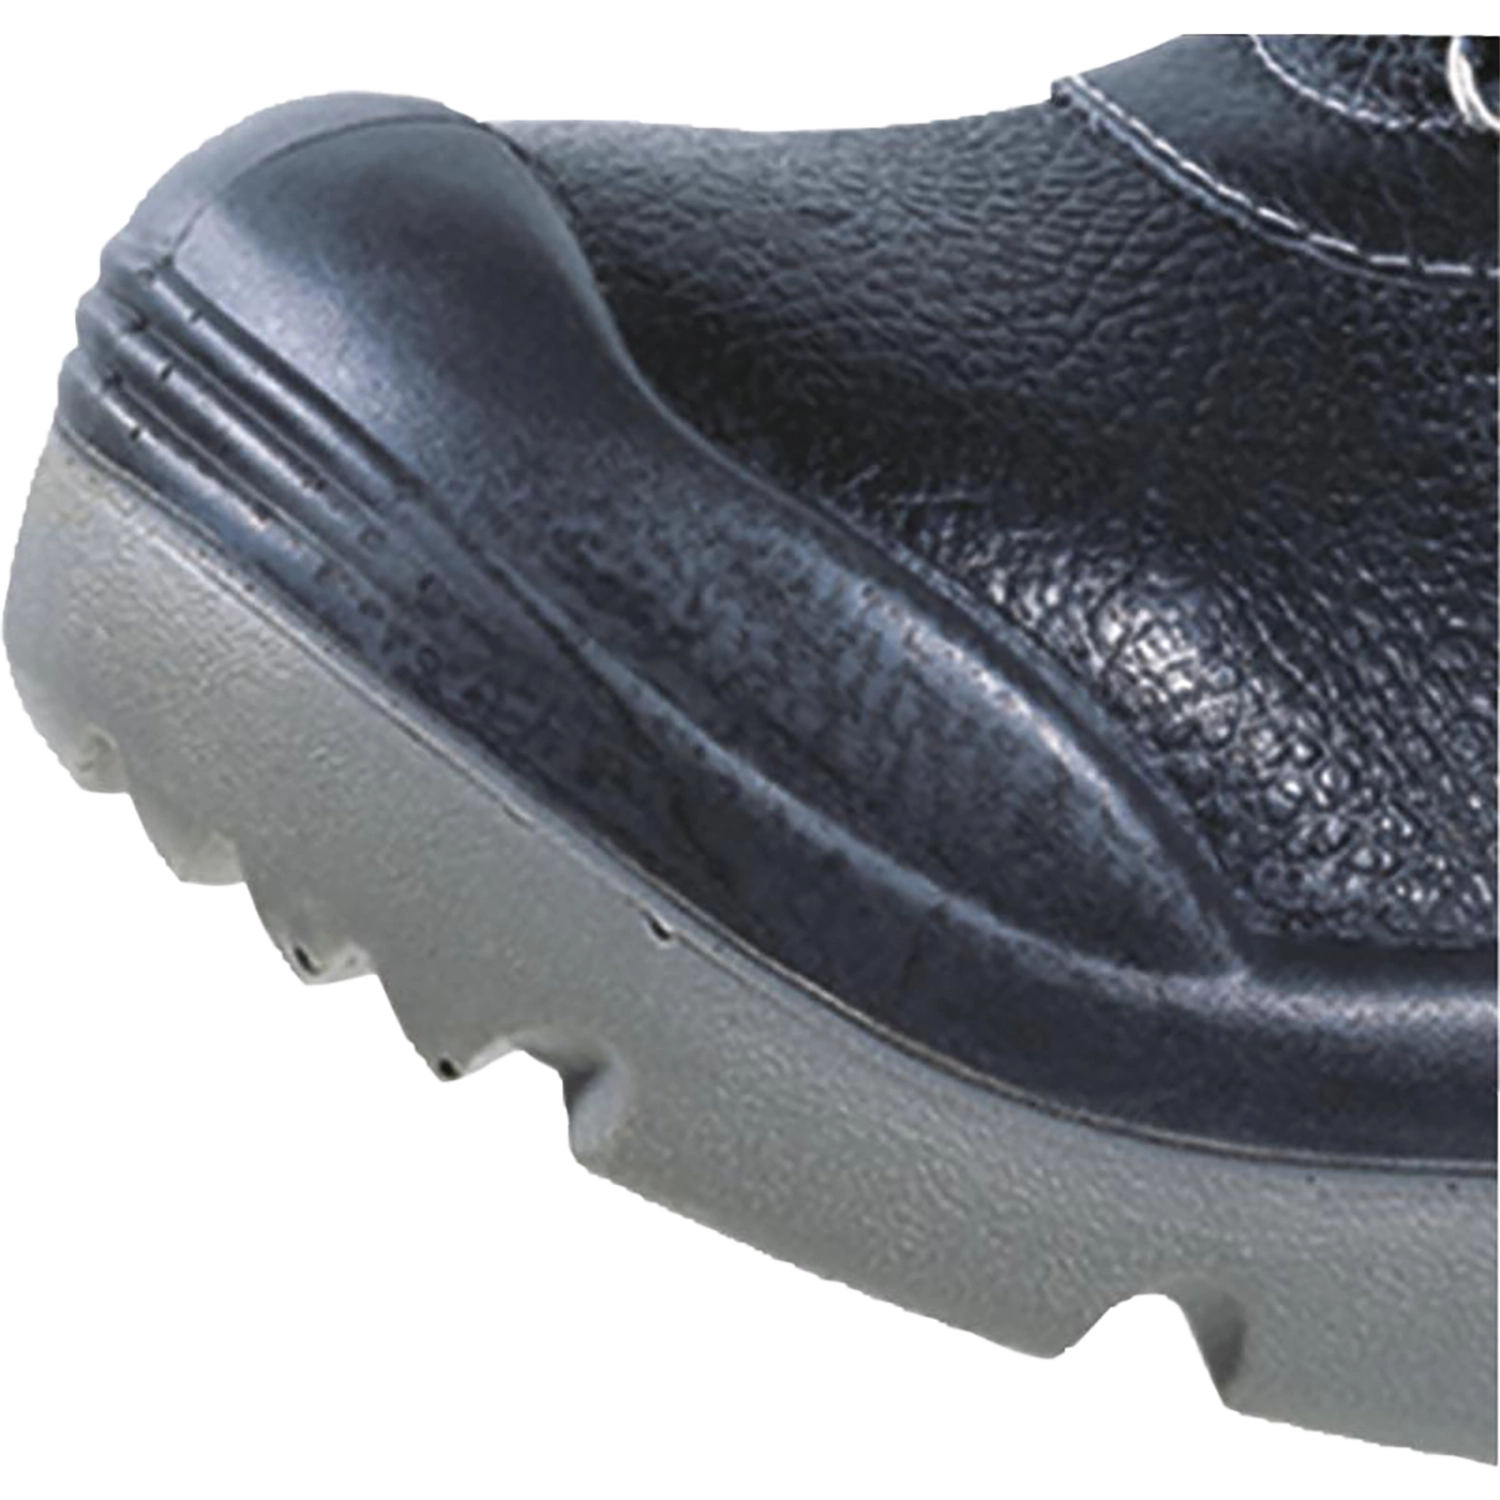 Chaussures montantes - X-Large - Sault S3 - noir - taille 47